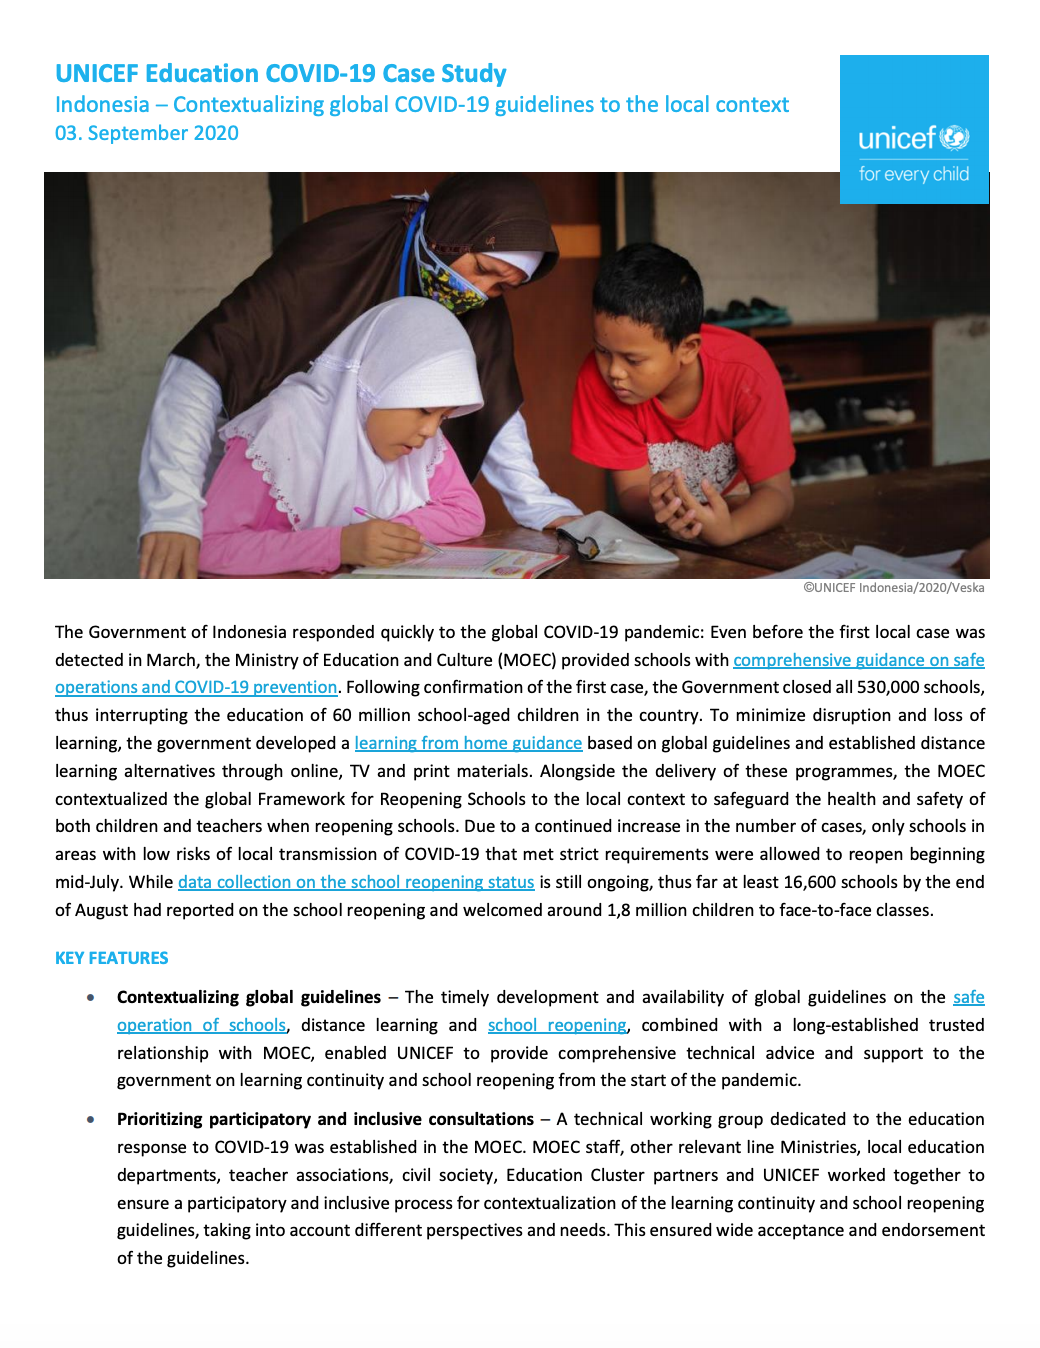 UNICEF Education COVID-19 Case Study (Indonesia)